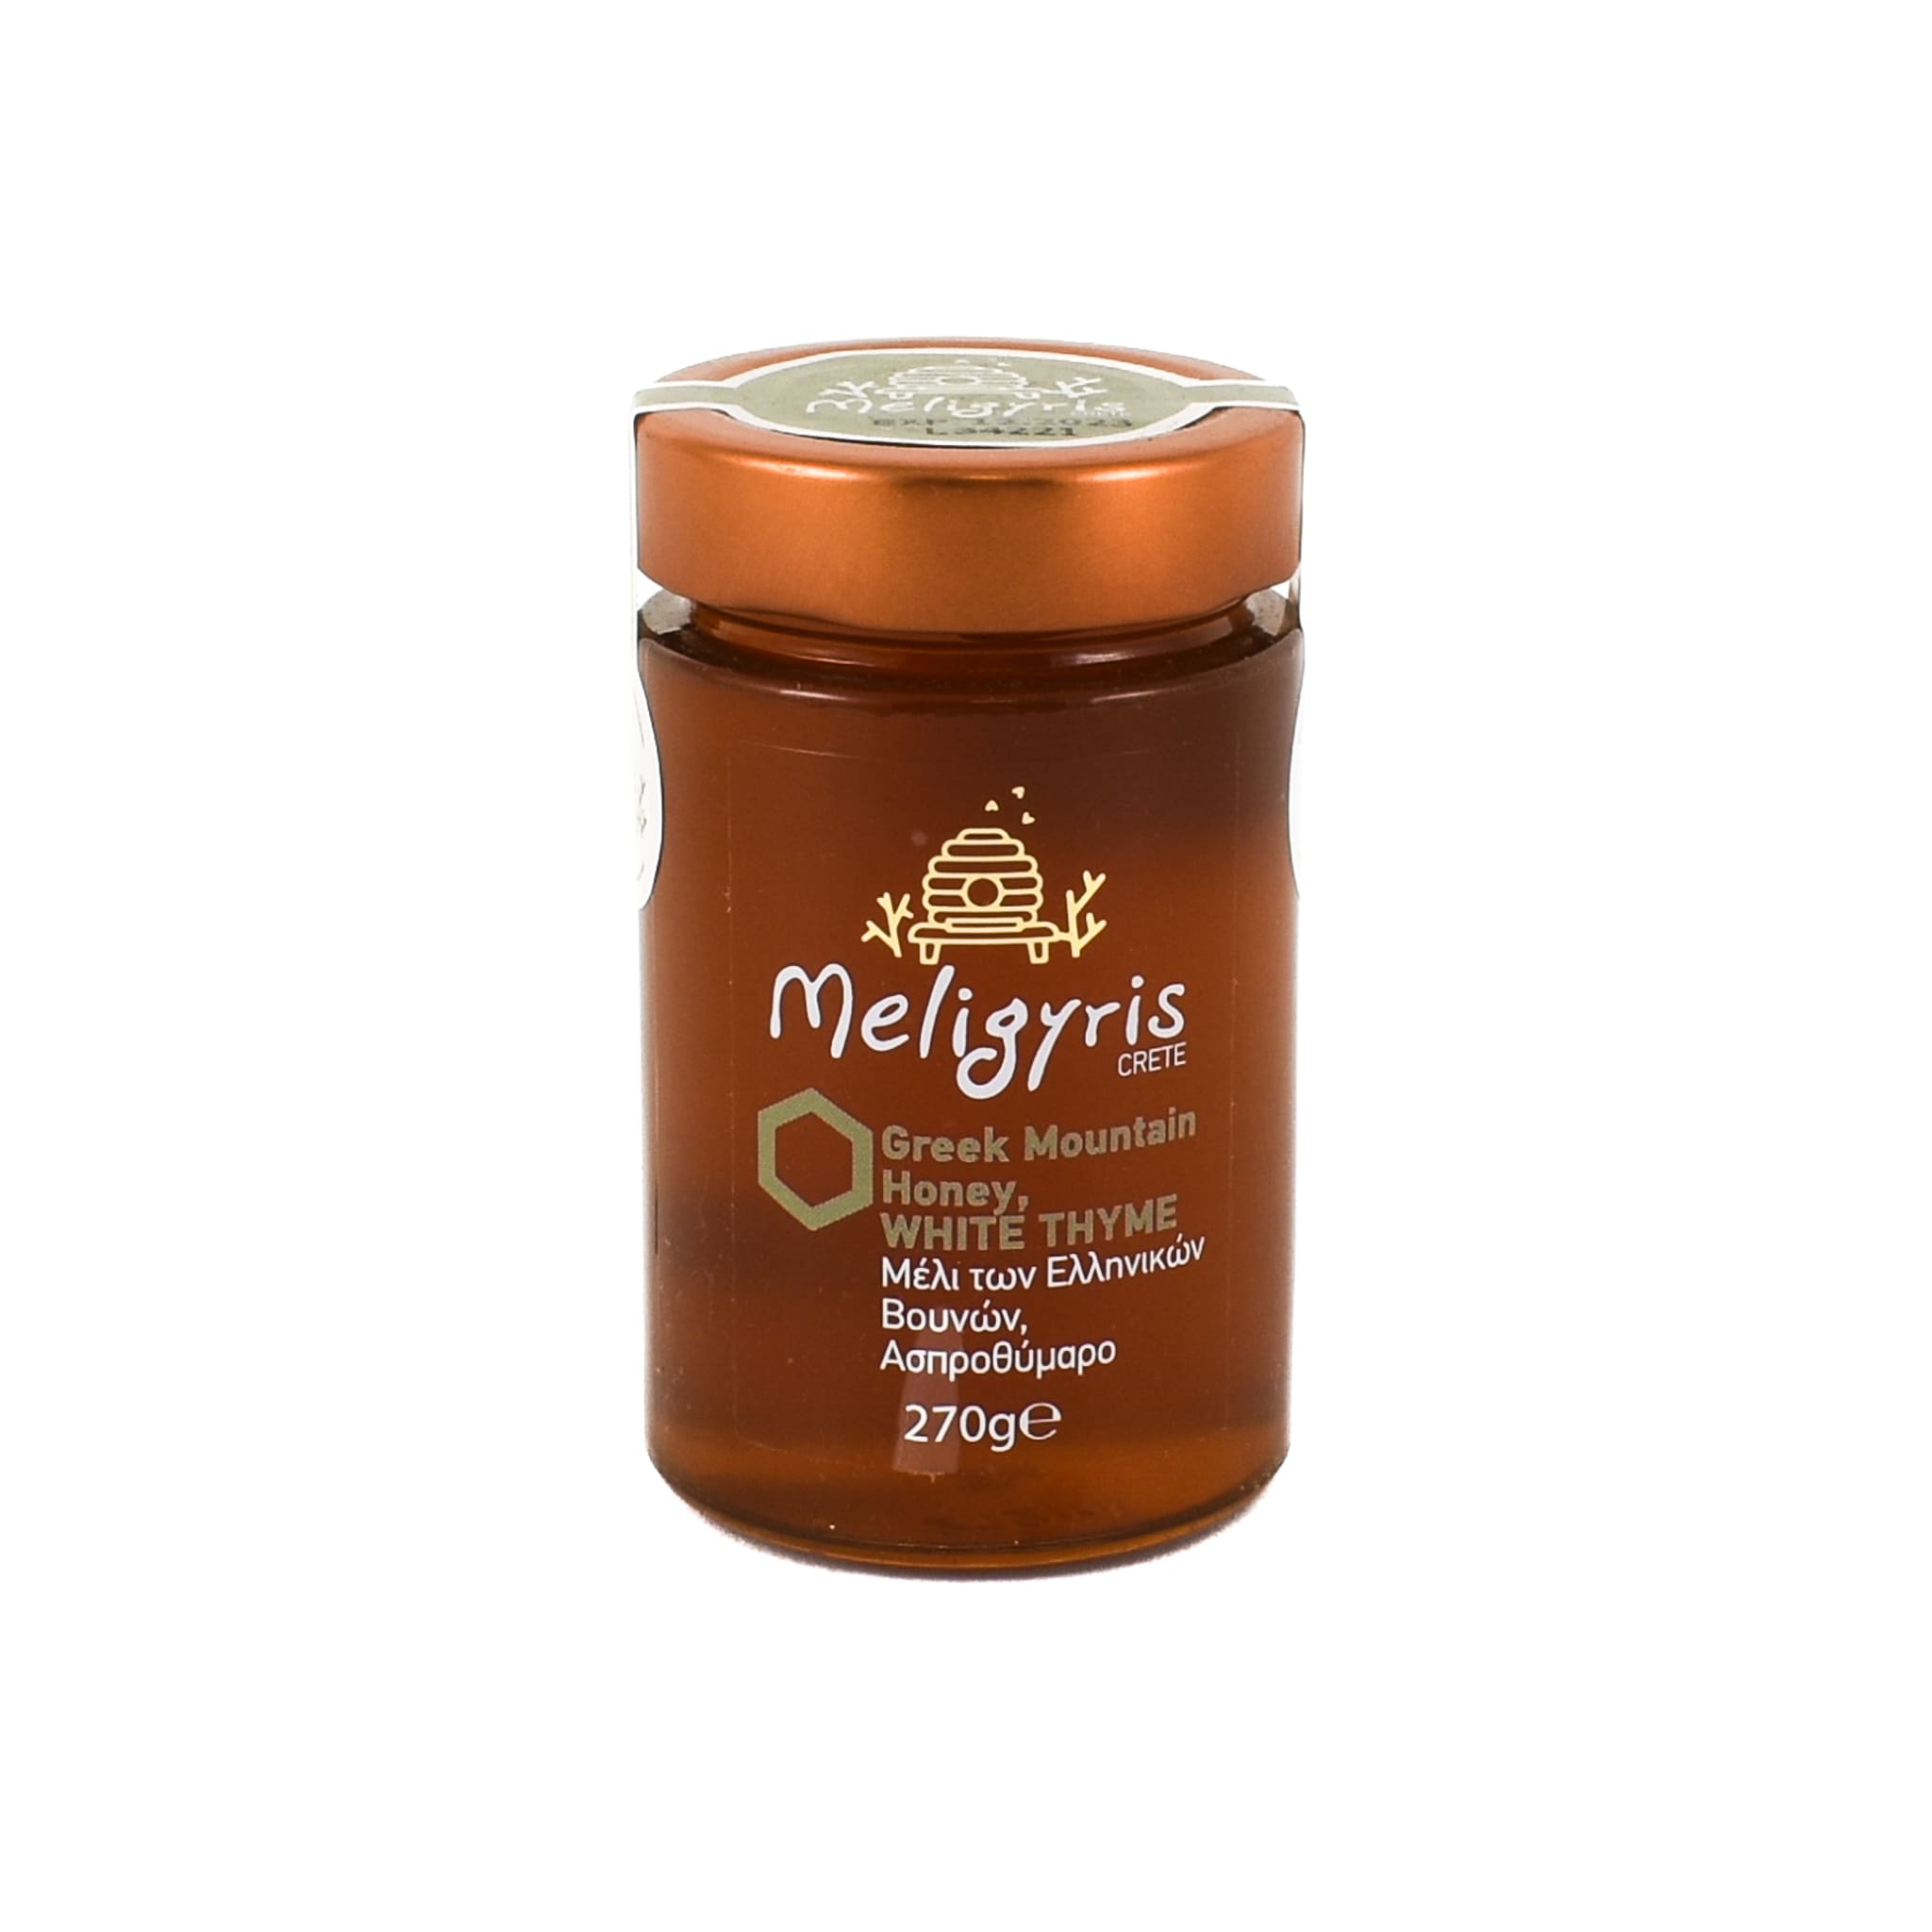 Meligyris White Thyme Honey 270g